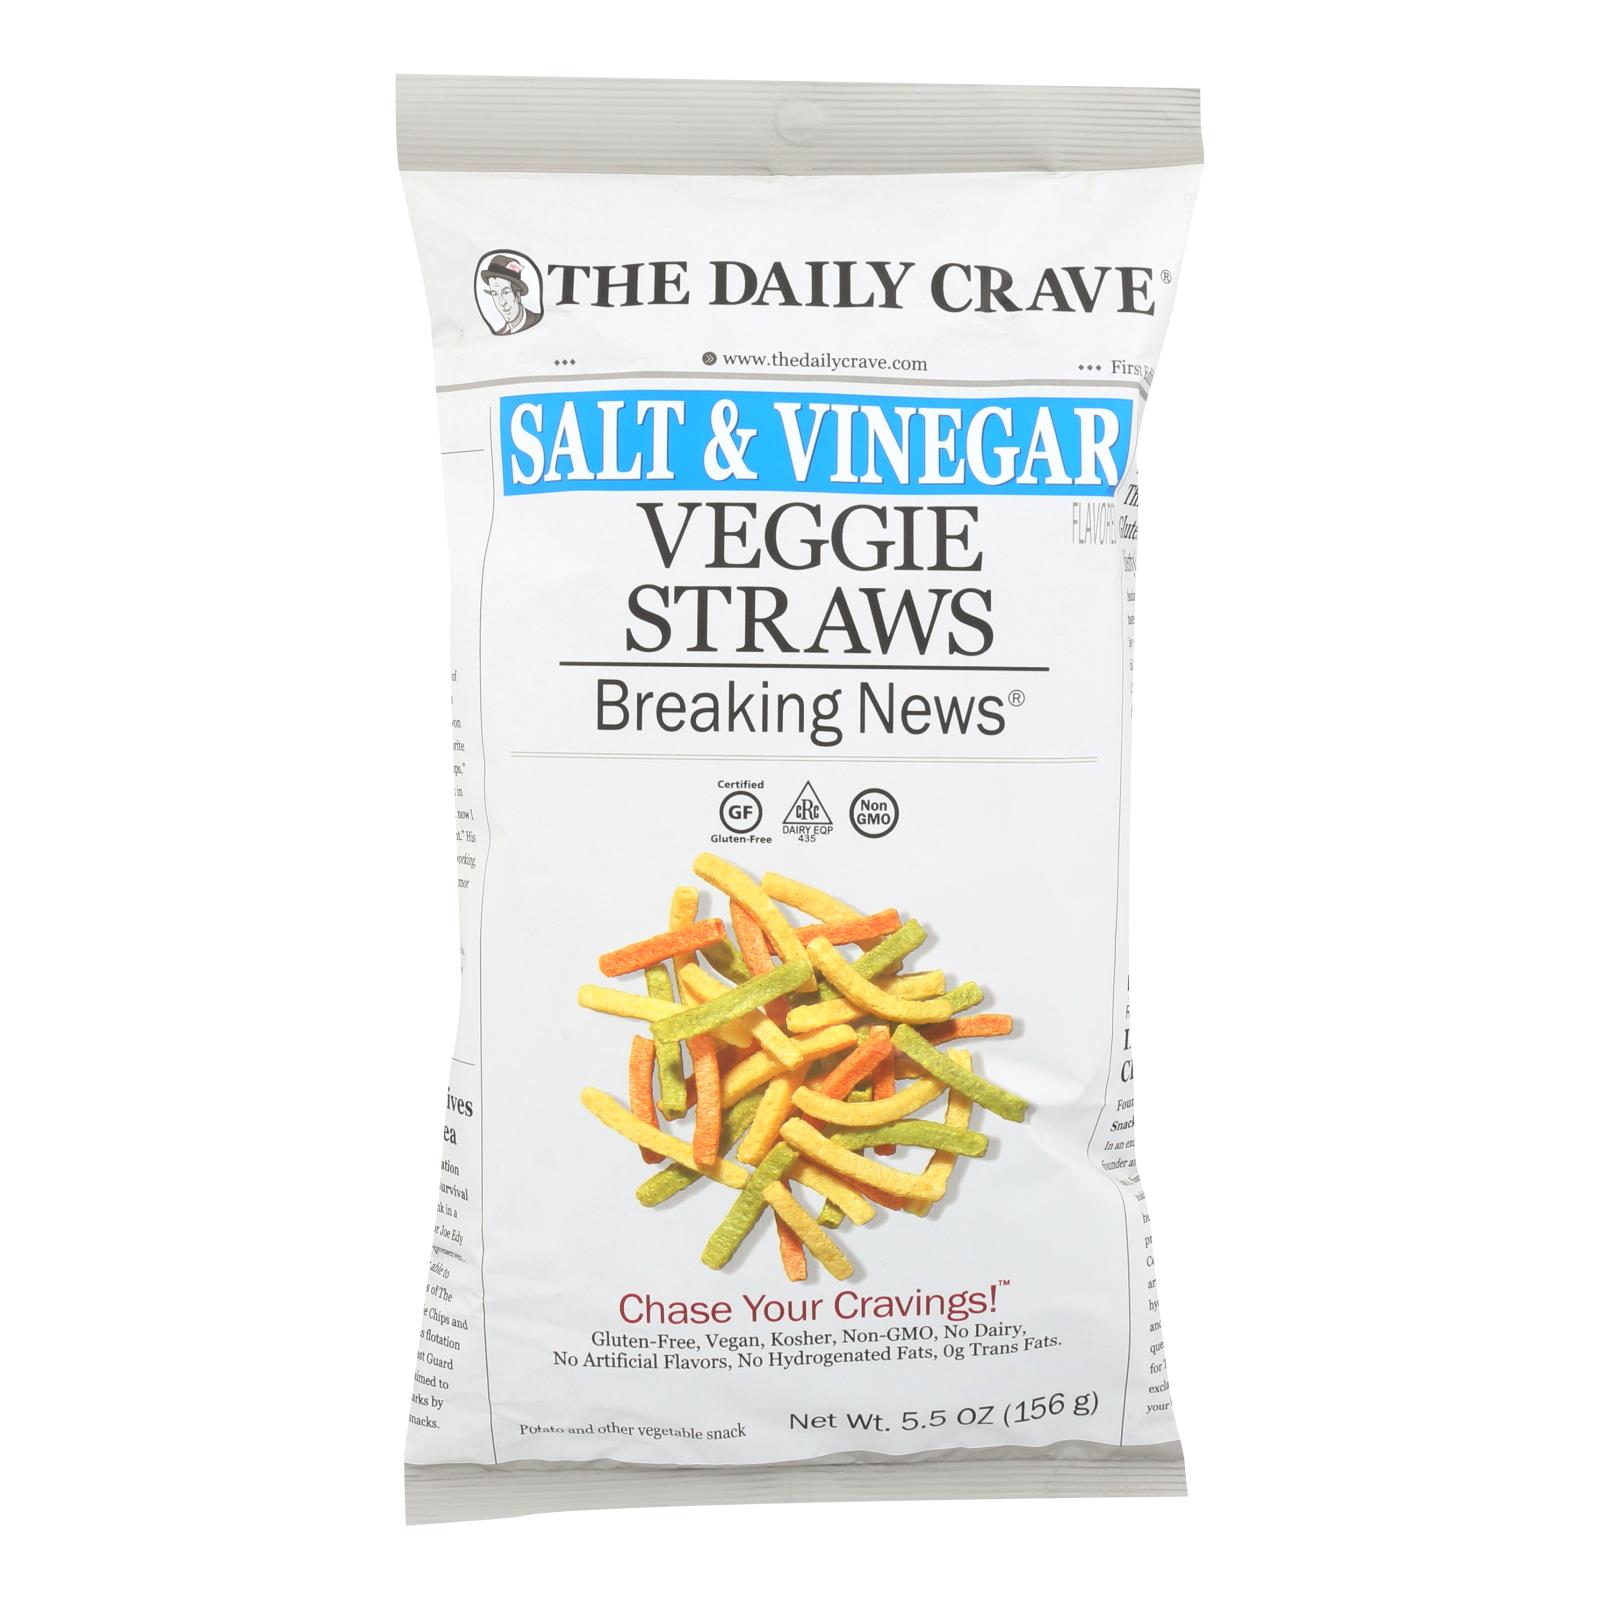 The Daily Crave - Veggie Straws Salt & Vinegar - 8개 묶음상품 - 5.5 OZ